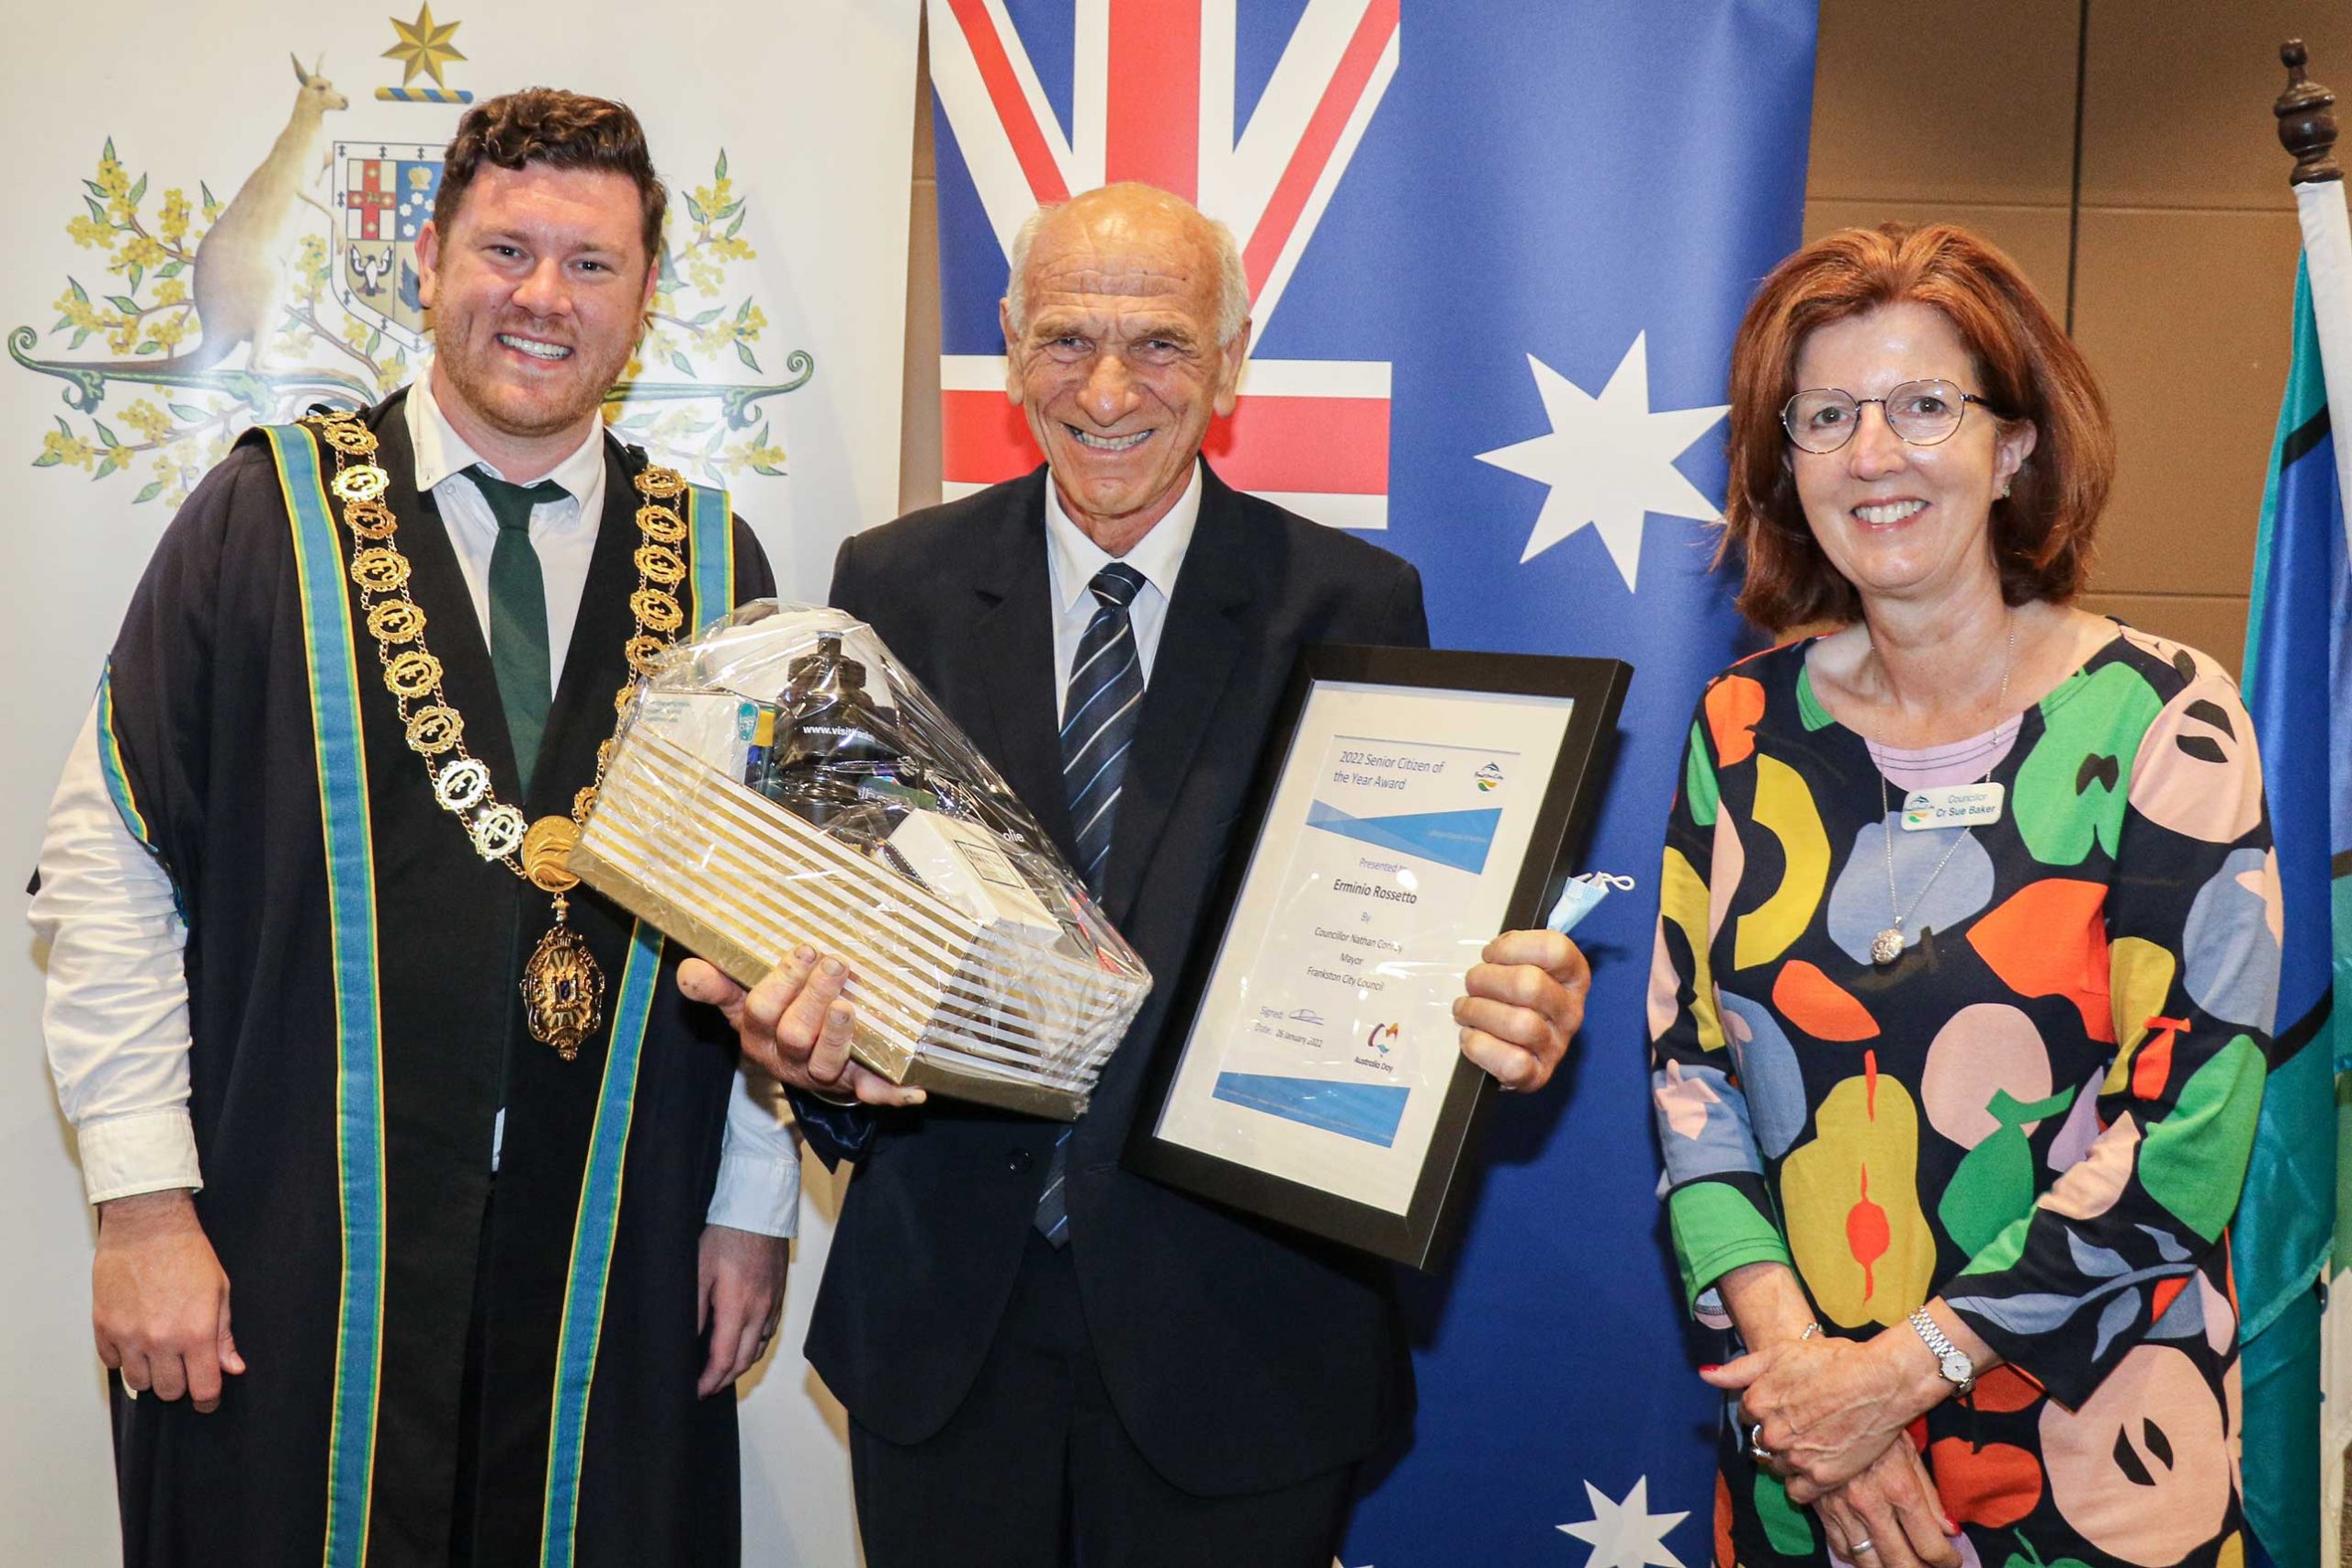 Minio receives Senior Citizen Award